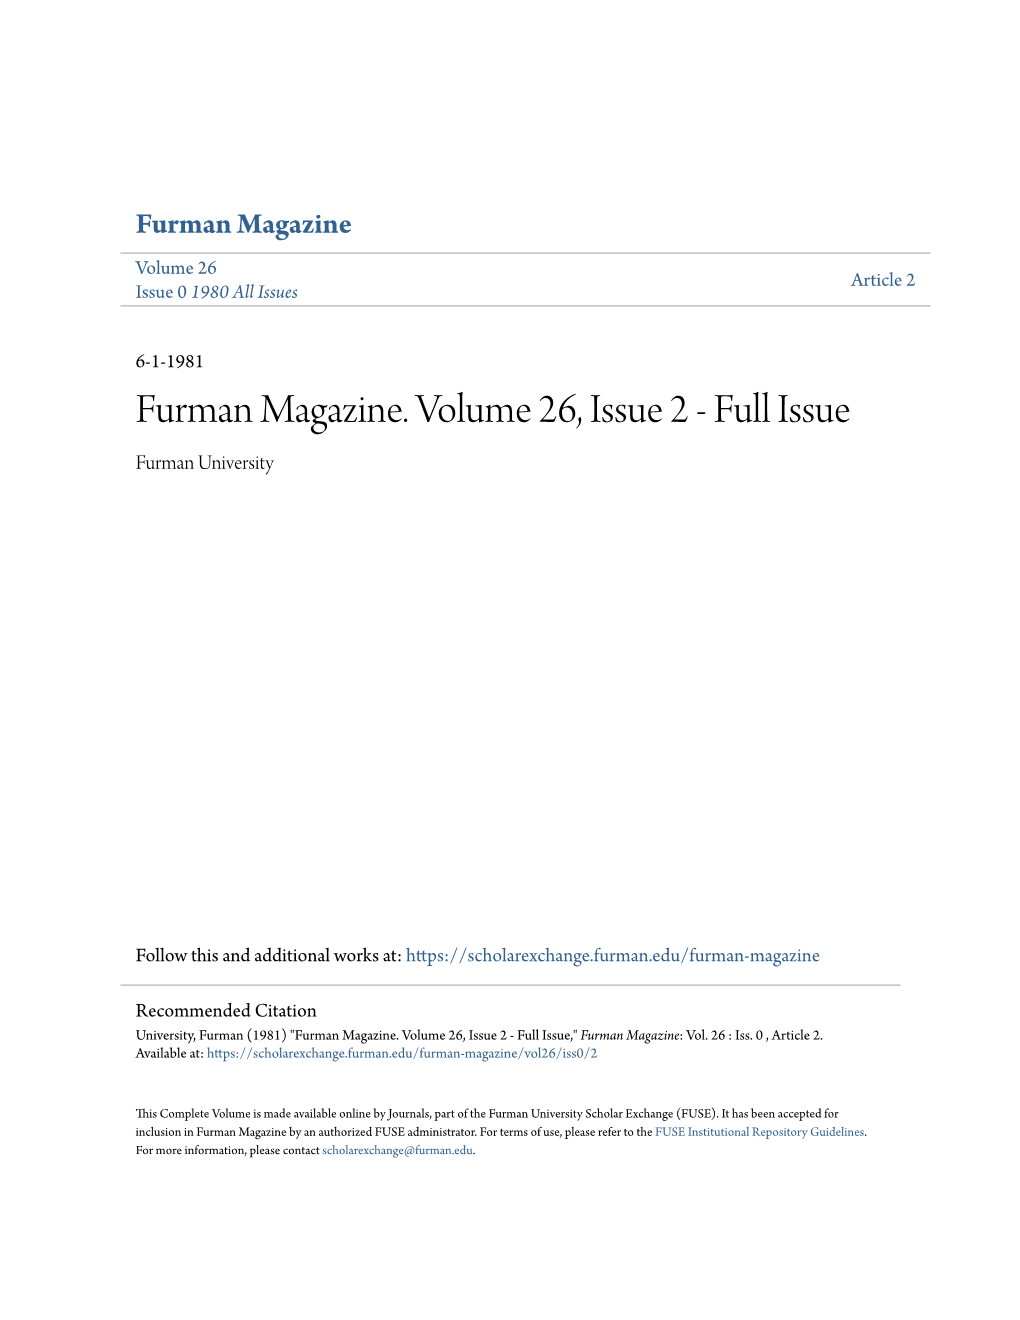 Furman Magazine. Volume 26, Issue 2 - Full Issue Furman University